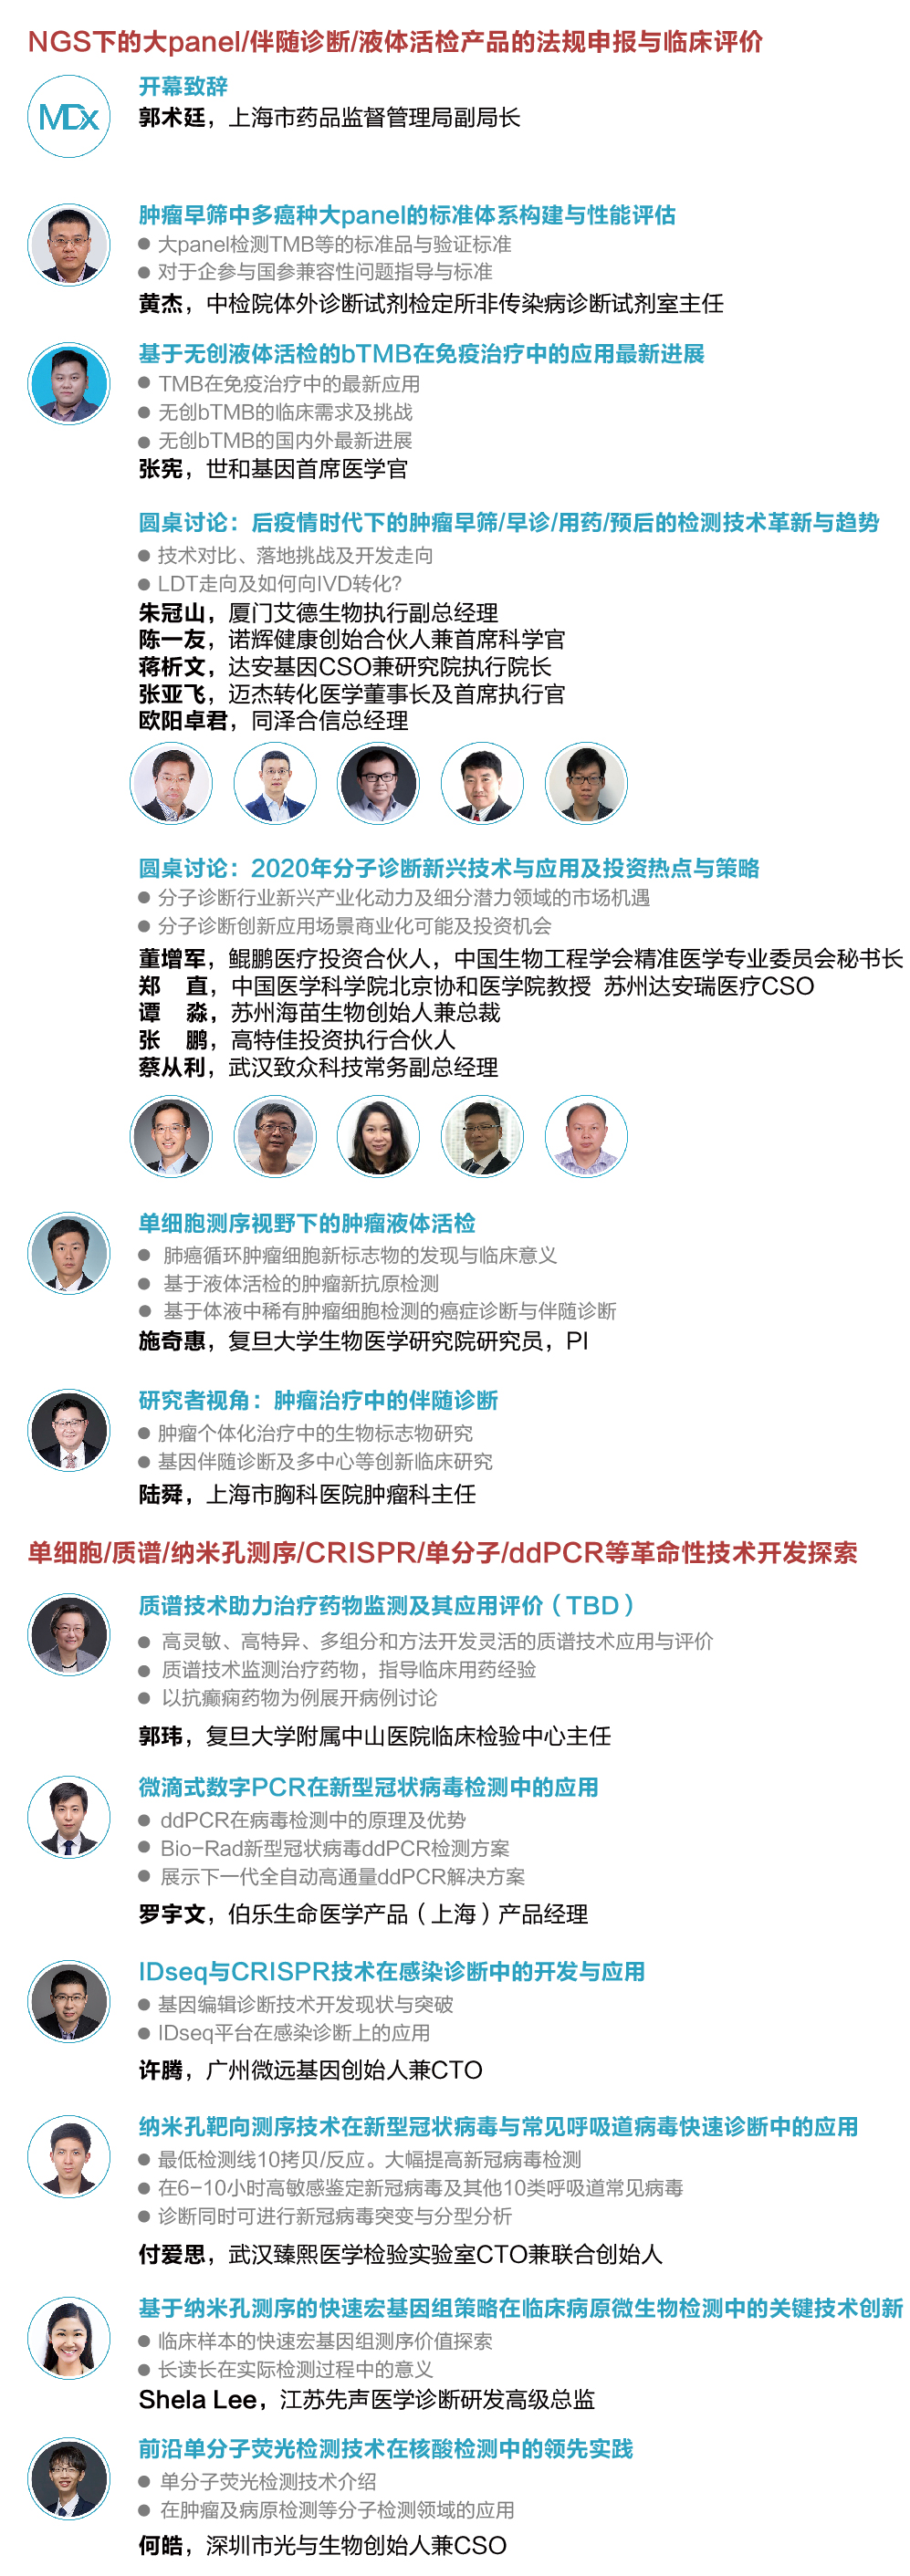 MDx 2020第六届中国先进分子诊断技术与应用论坛